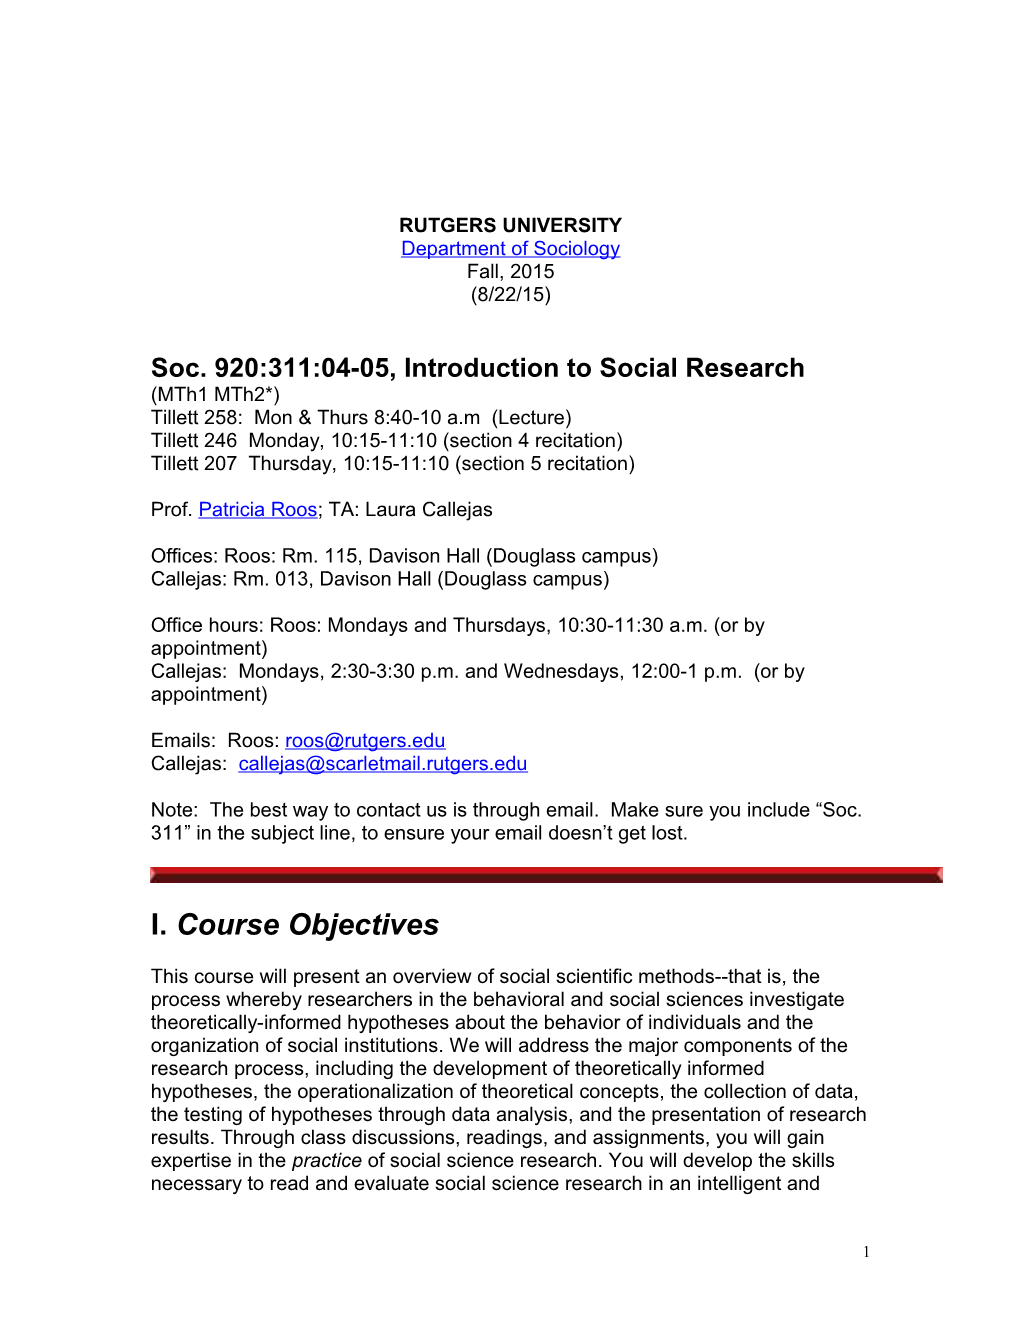 RUTGERS UNIVERSITY Departmentof Sociology Fall, 2015 (8/22/15)